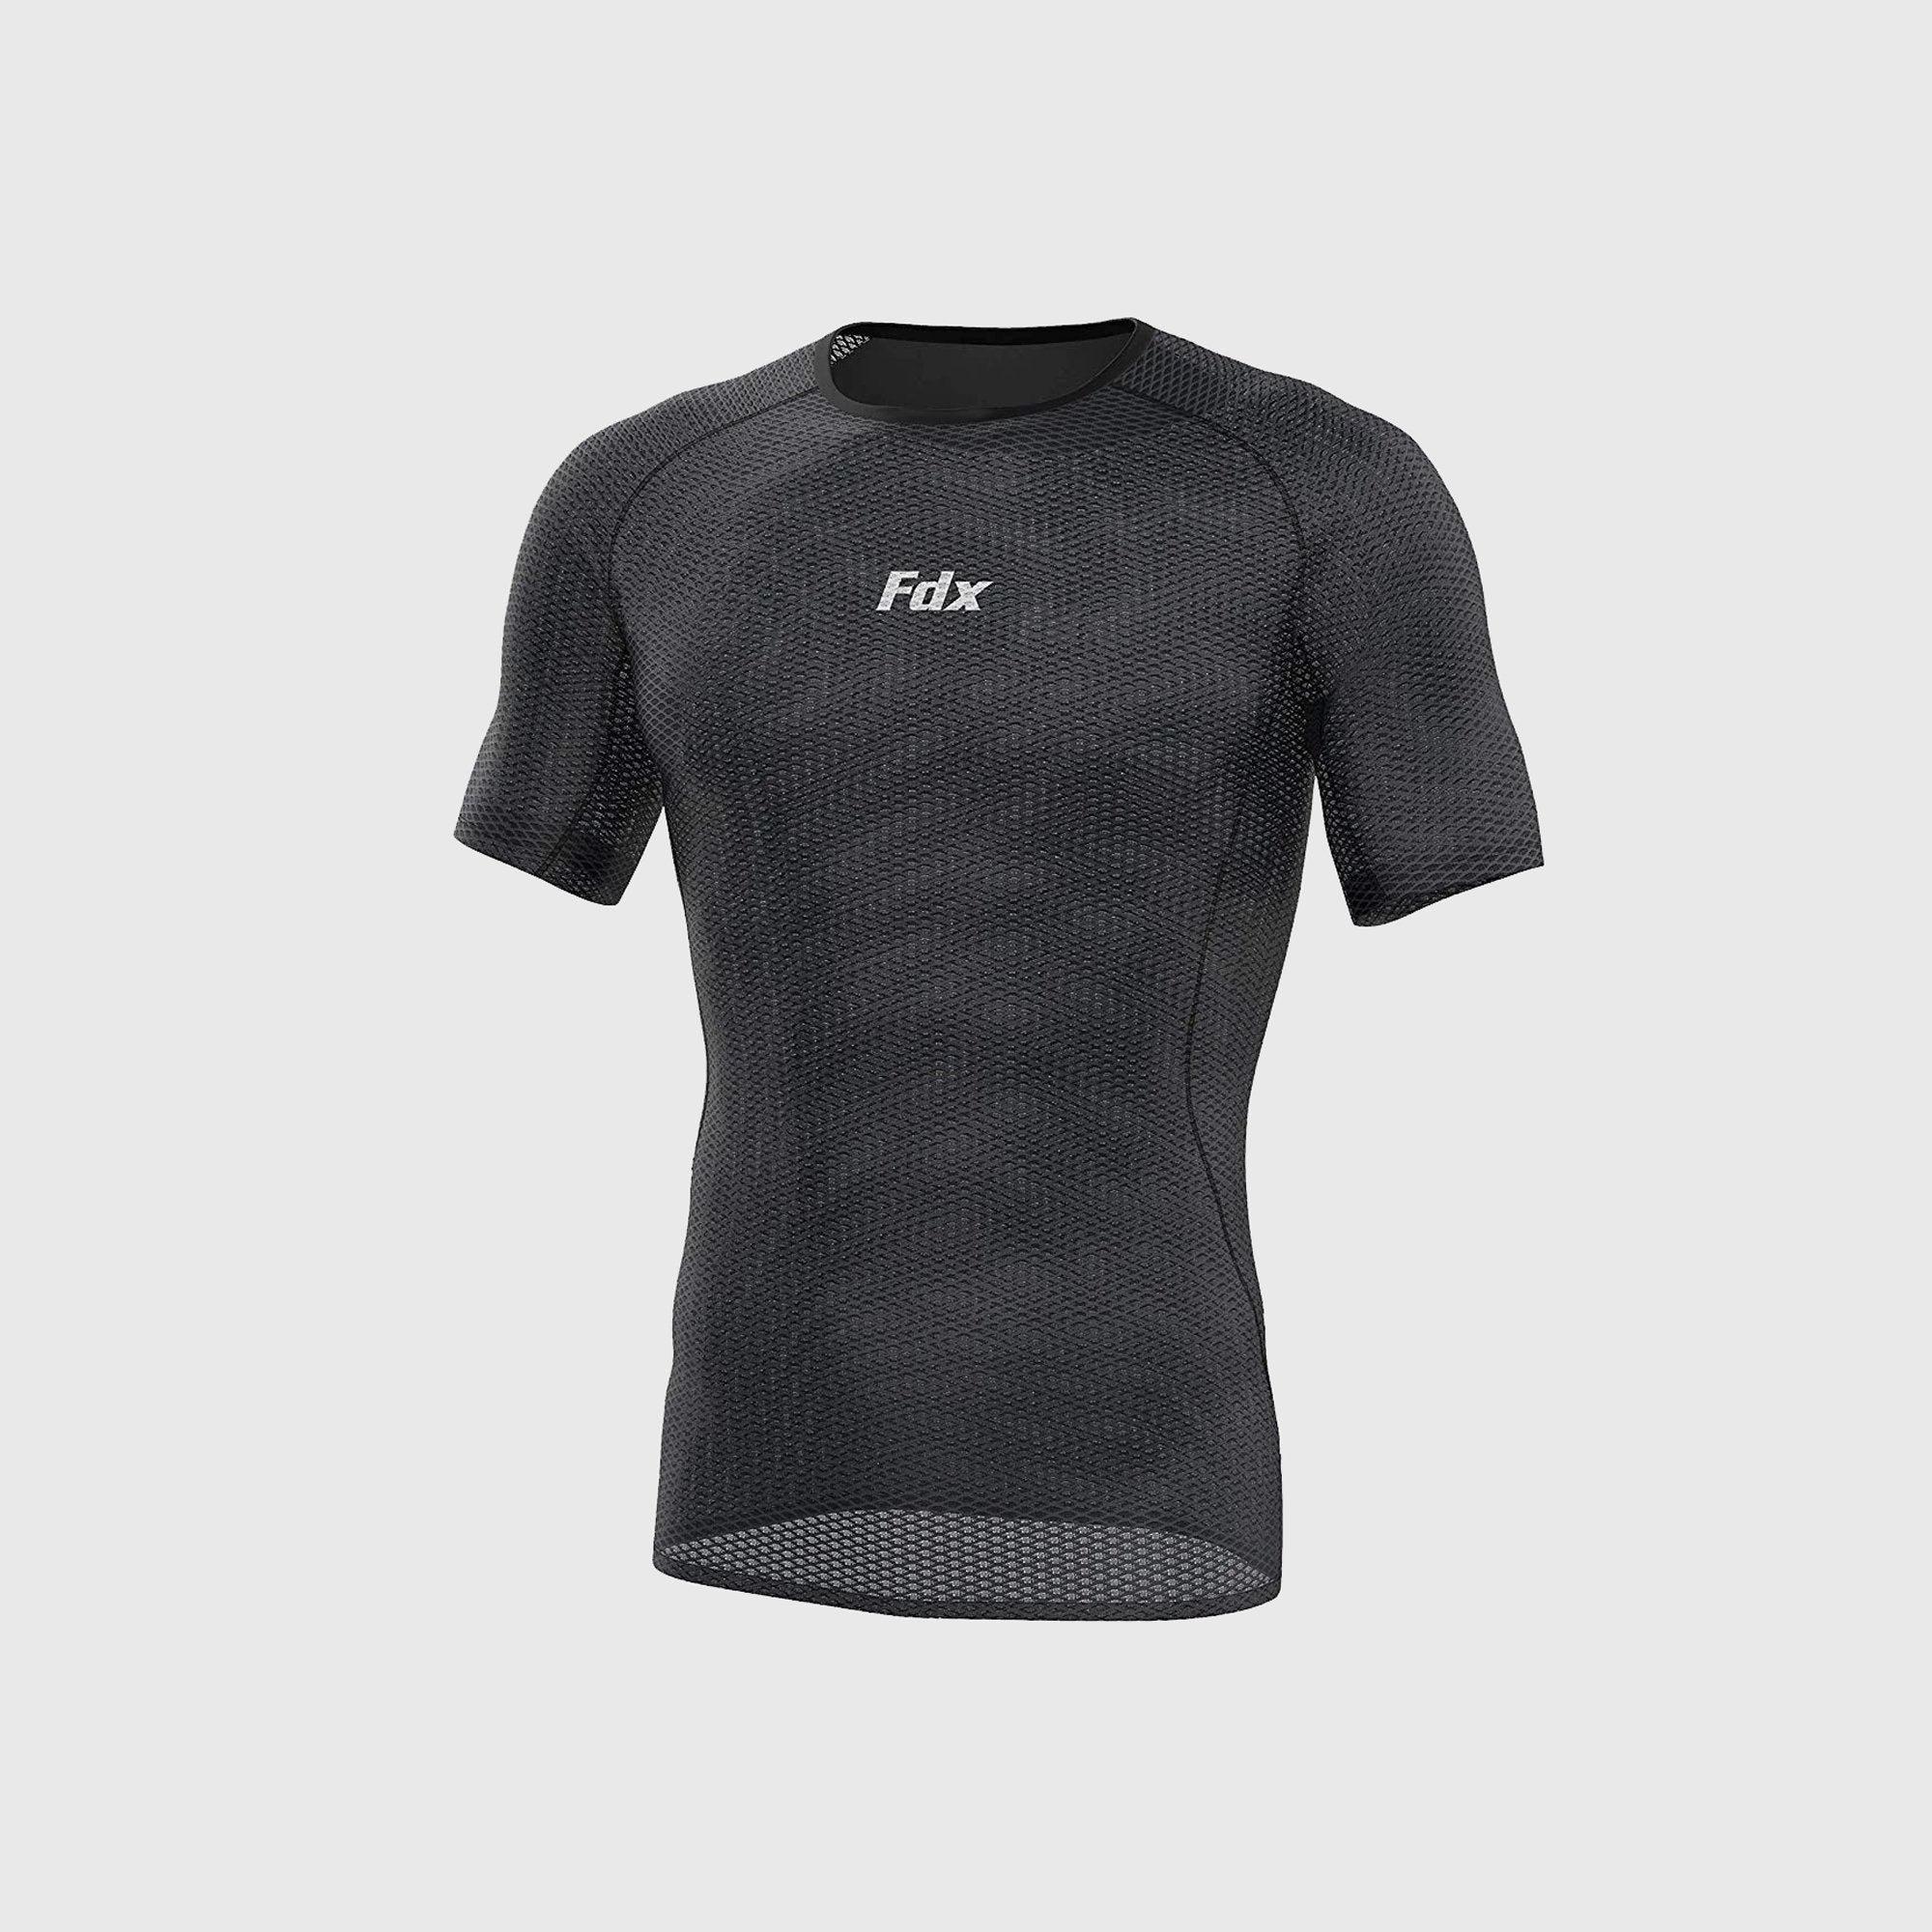 Fdx Men's Best Black Short Sleeve Mesh Compression Top Running Gym Workout Wear Rash Guard Stretchable Breathable - Aeroform